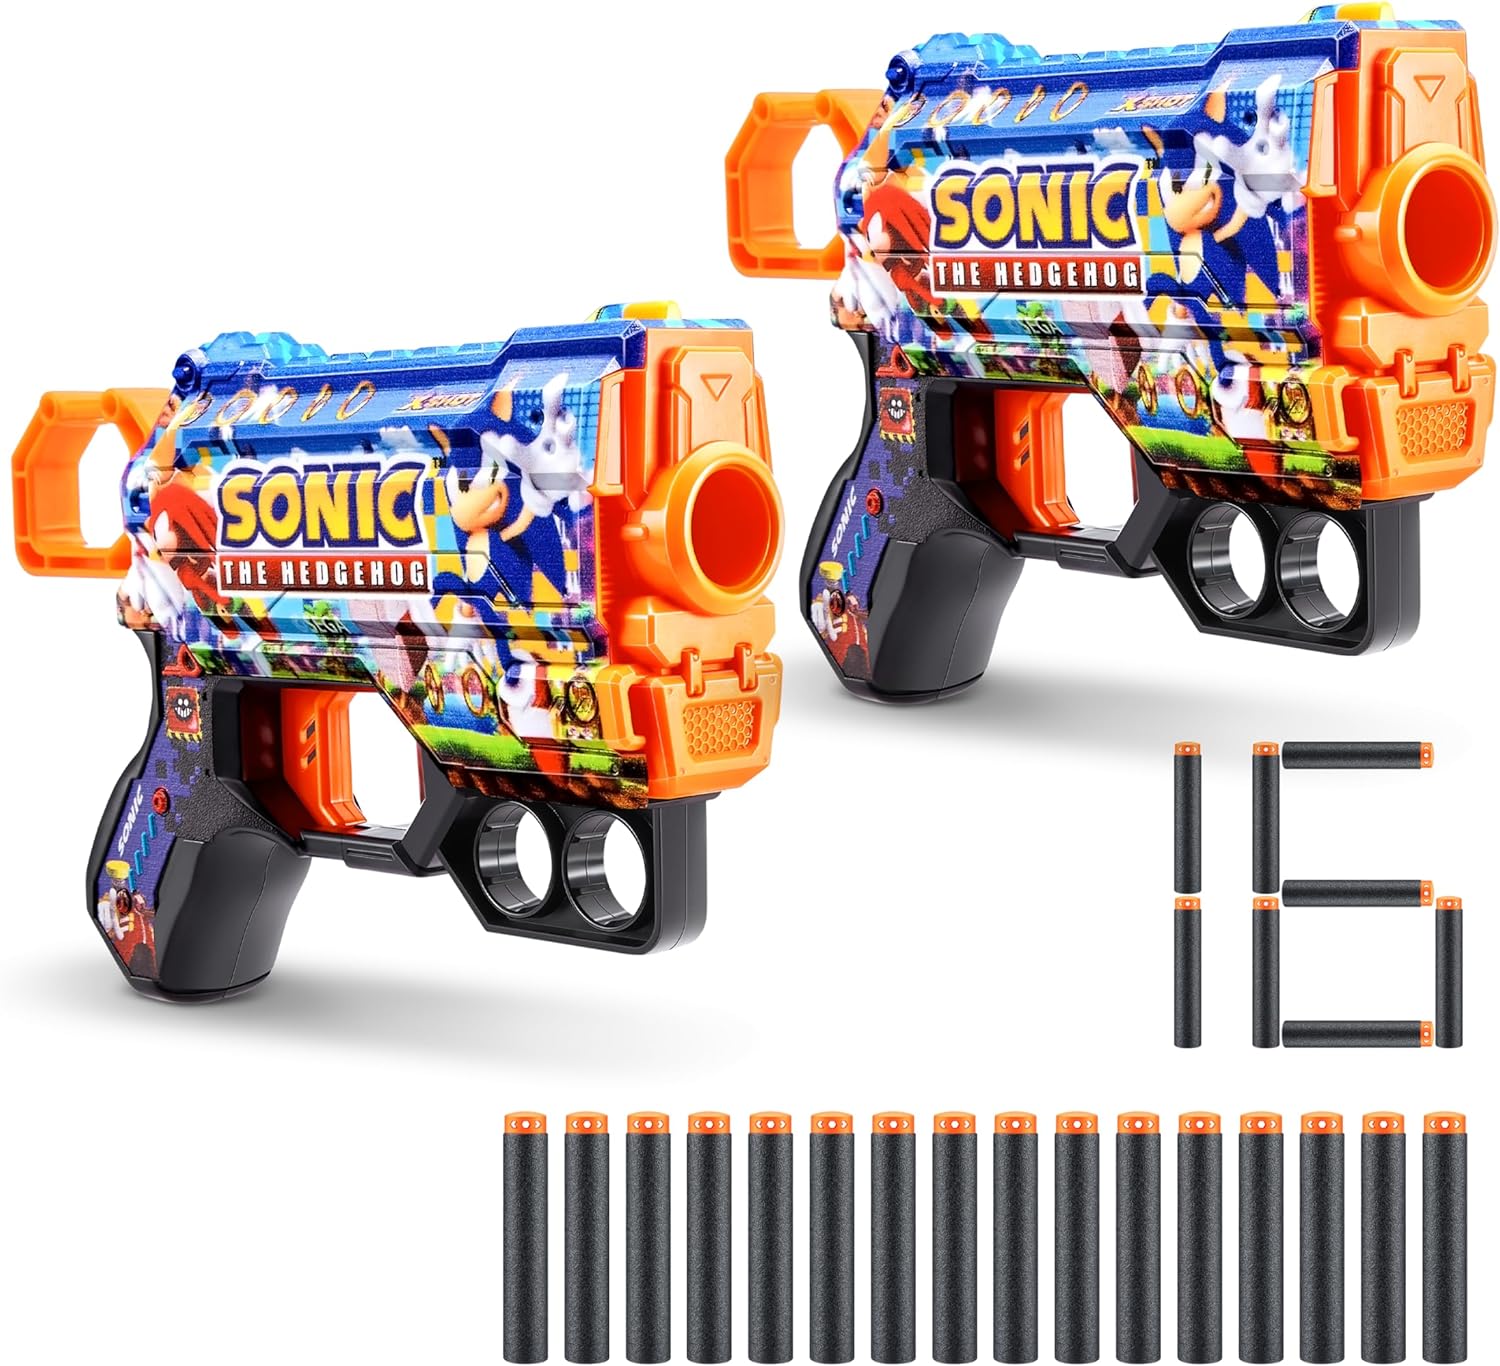 X-Shot Skins Menace - Sonic Mega (2 Pack + 16 Darts) by ZURU, Easy Reload, Air Pocket Dart Technology, Toy Foam Dart Blaster for Kids, Teens, Adults, Frustration Free Packaging